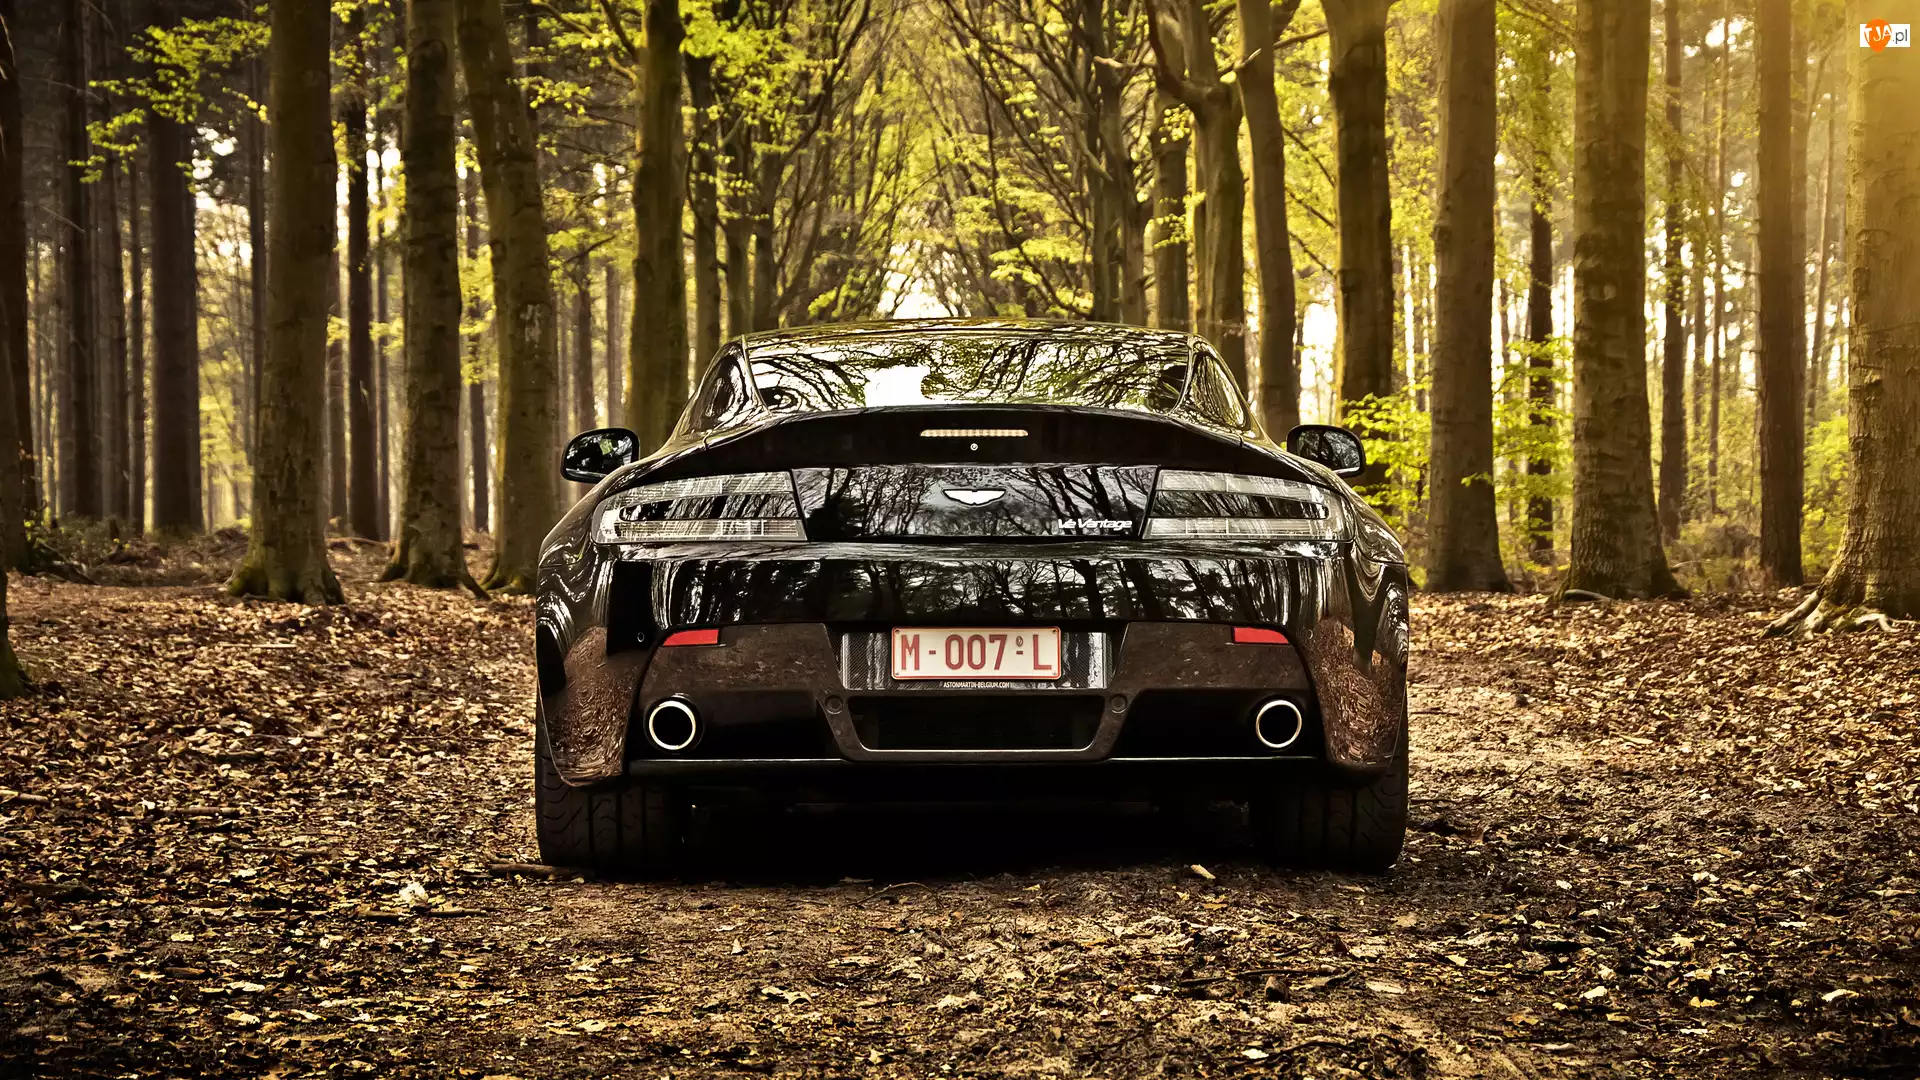 Aston Martin V8 Vantage Roadster, Drzewa, 2012, Las